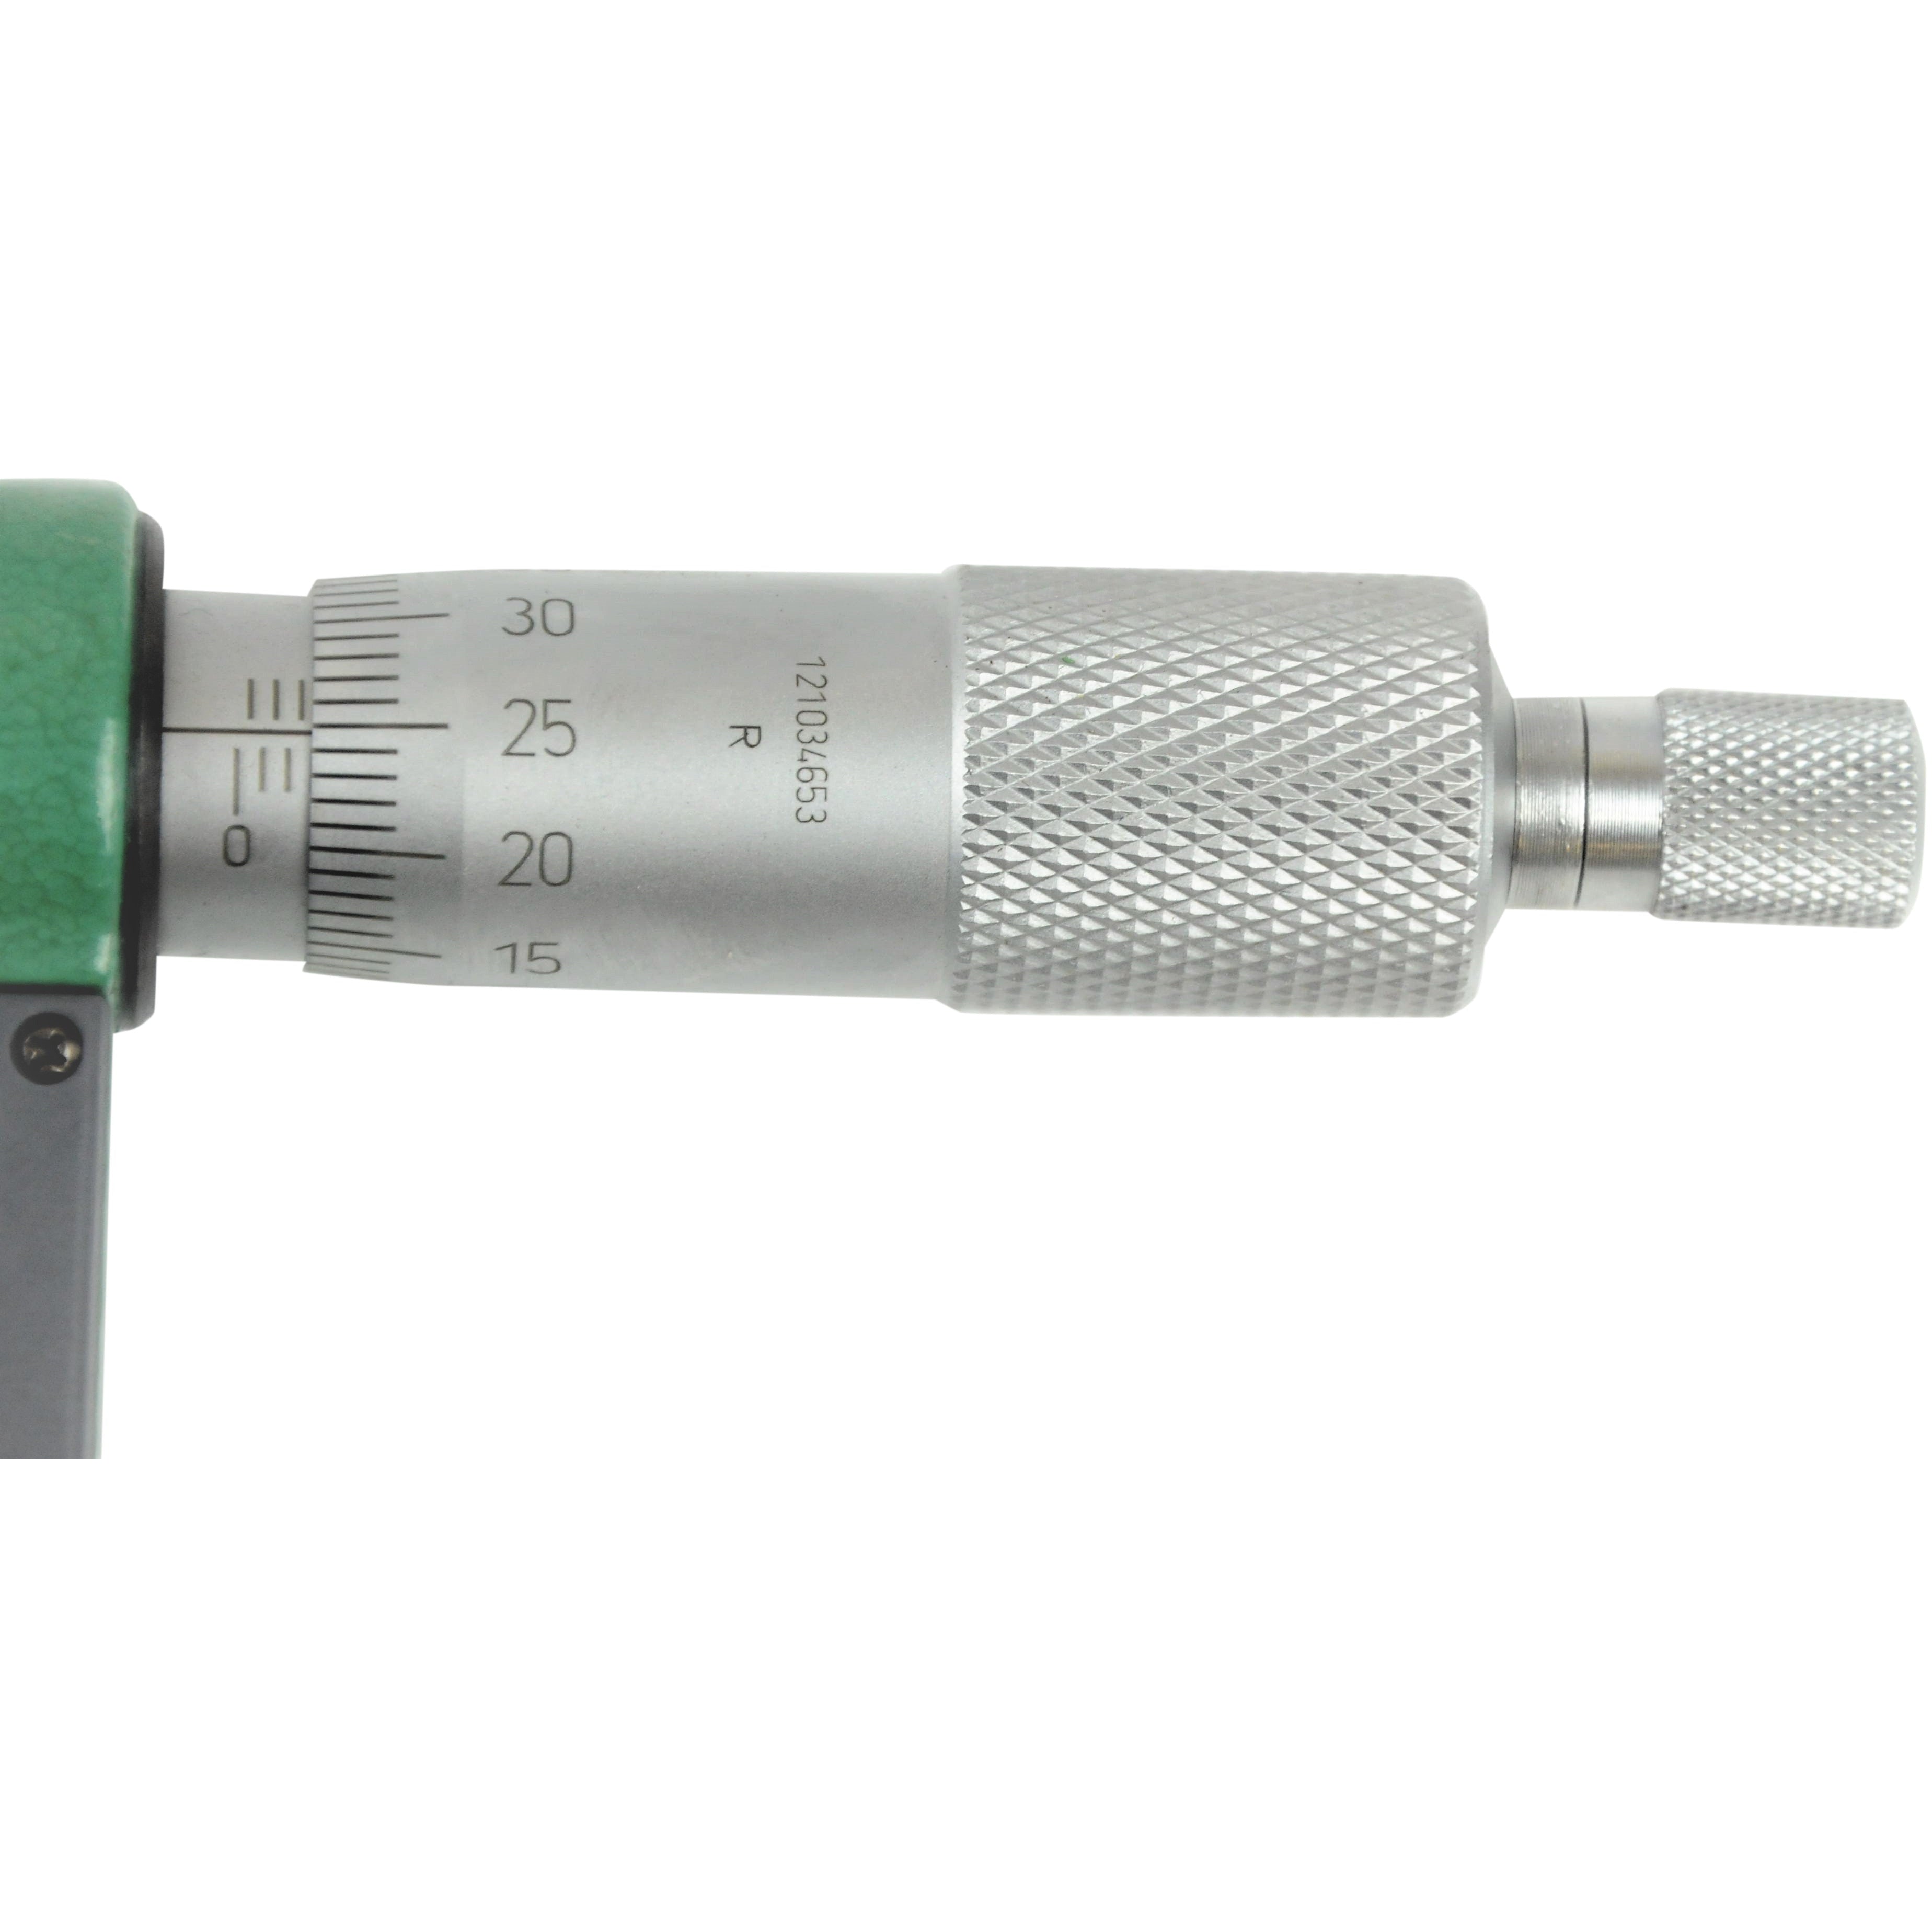 Insize IP65 Digital Outside Micrometer 0-25mm / 0-1" Range Series 3101-25FA